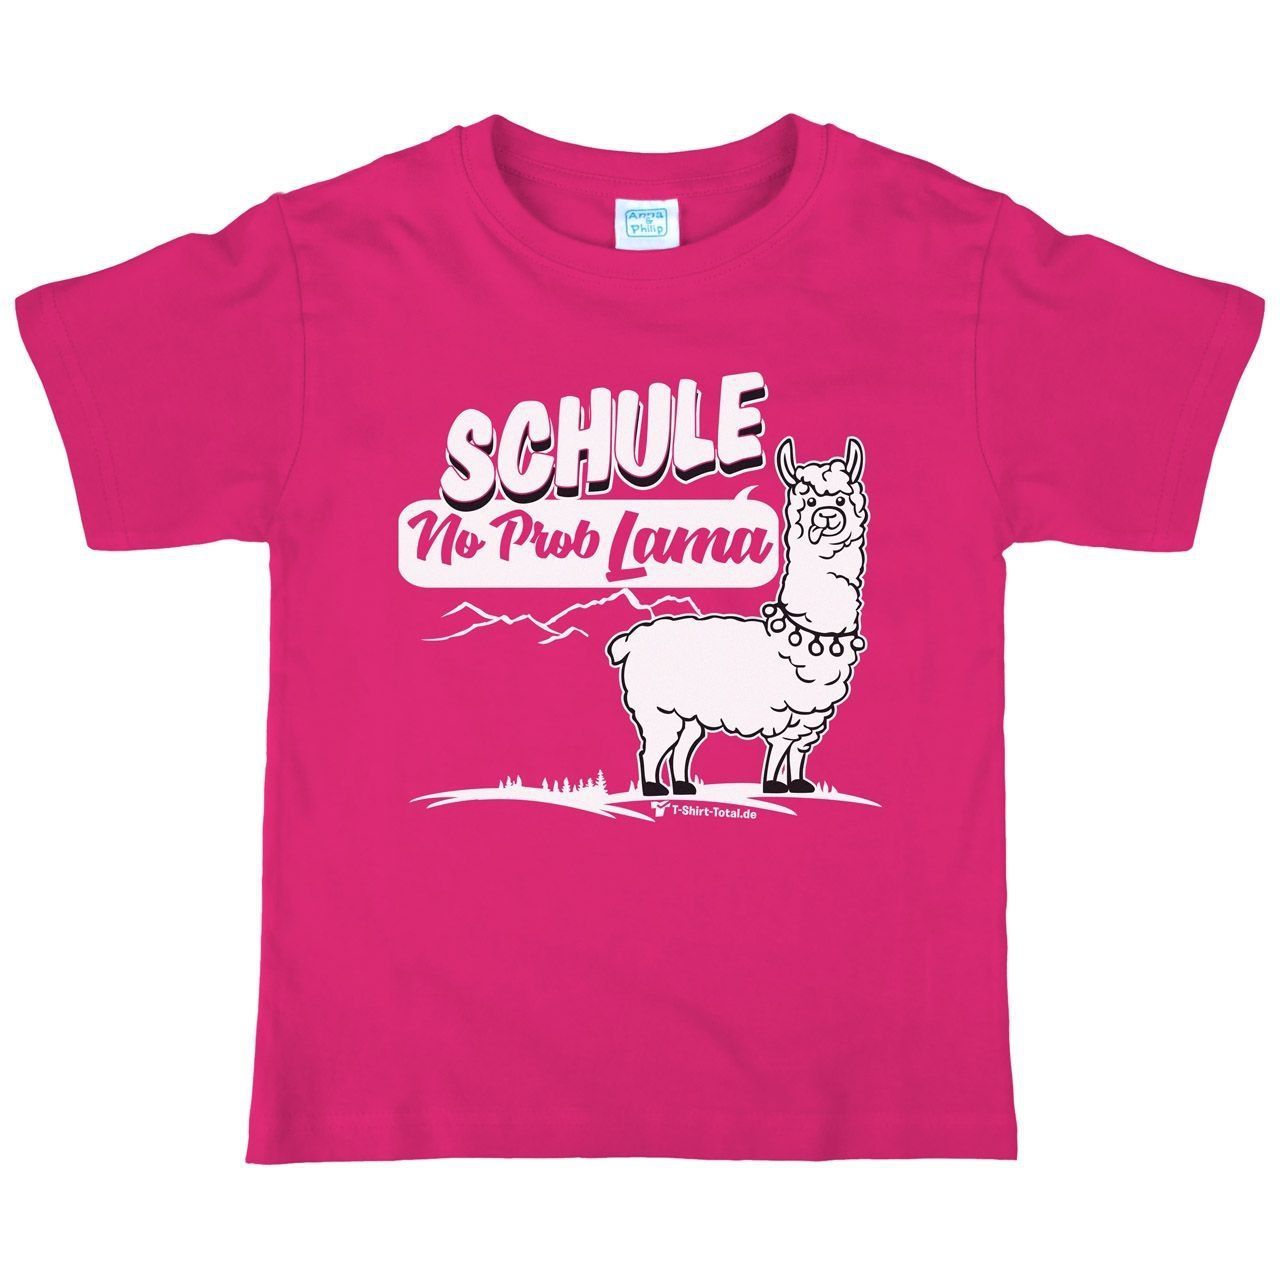 Schule No Prob Lama Kinder T-Shirt pink 134 / 140